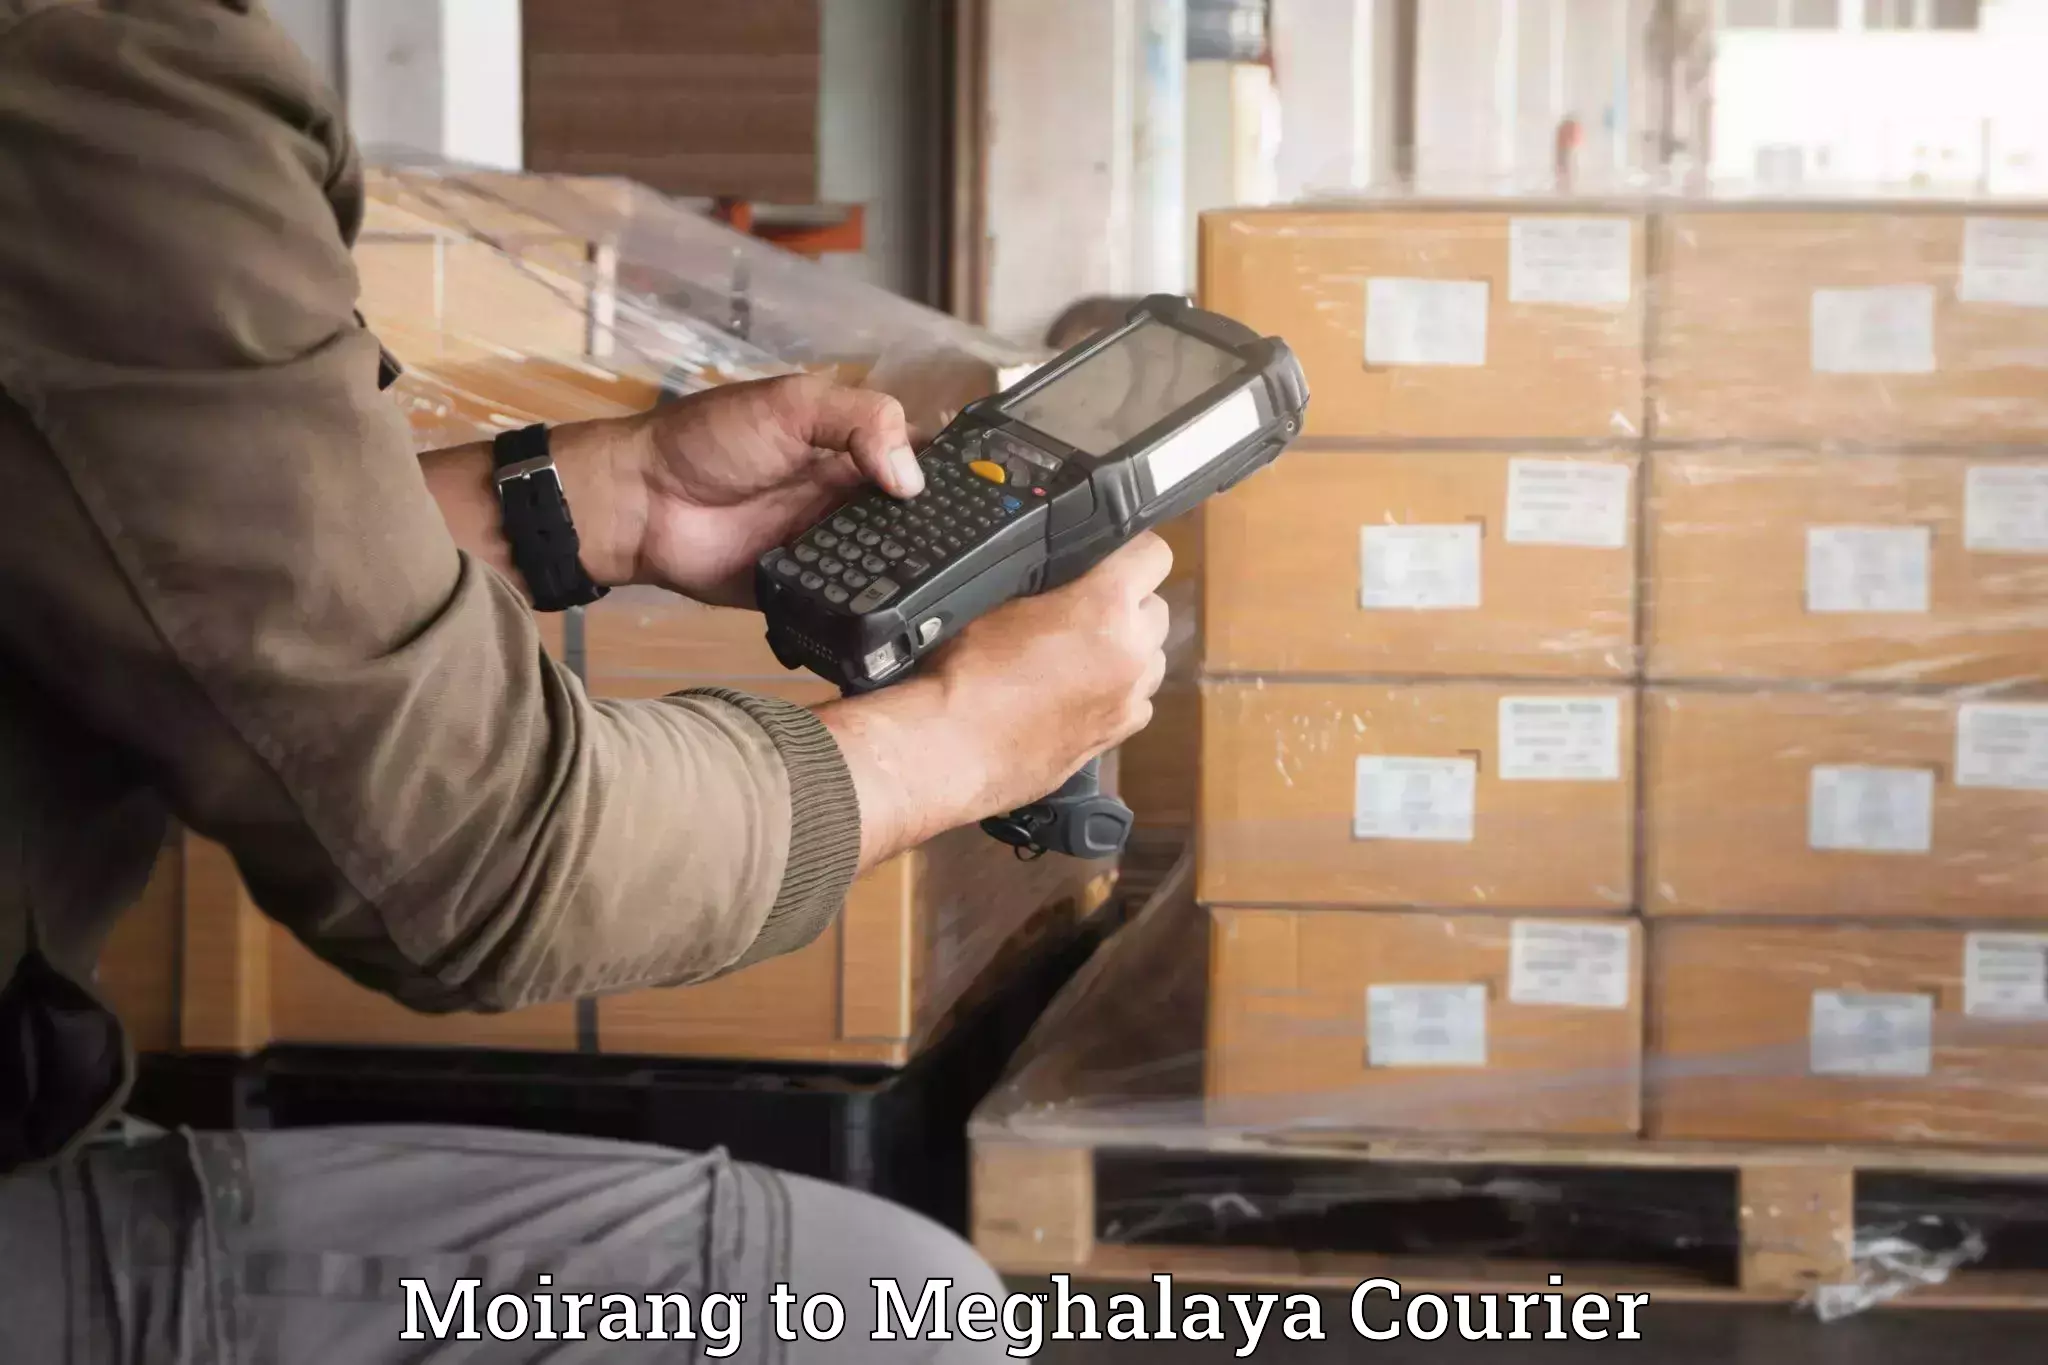 Luggage shipment specialists Moirang to Meghalaya